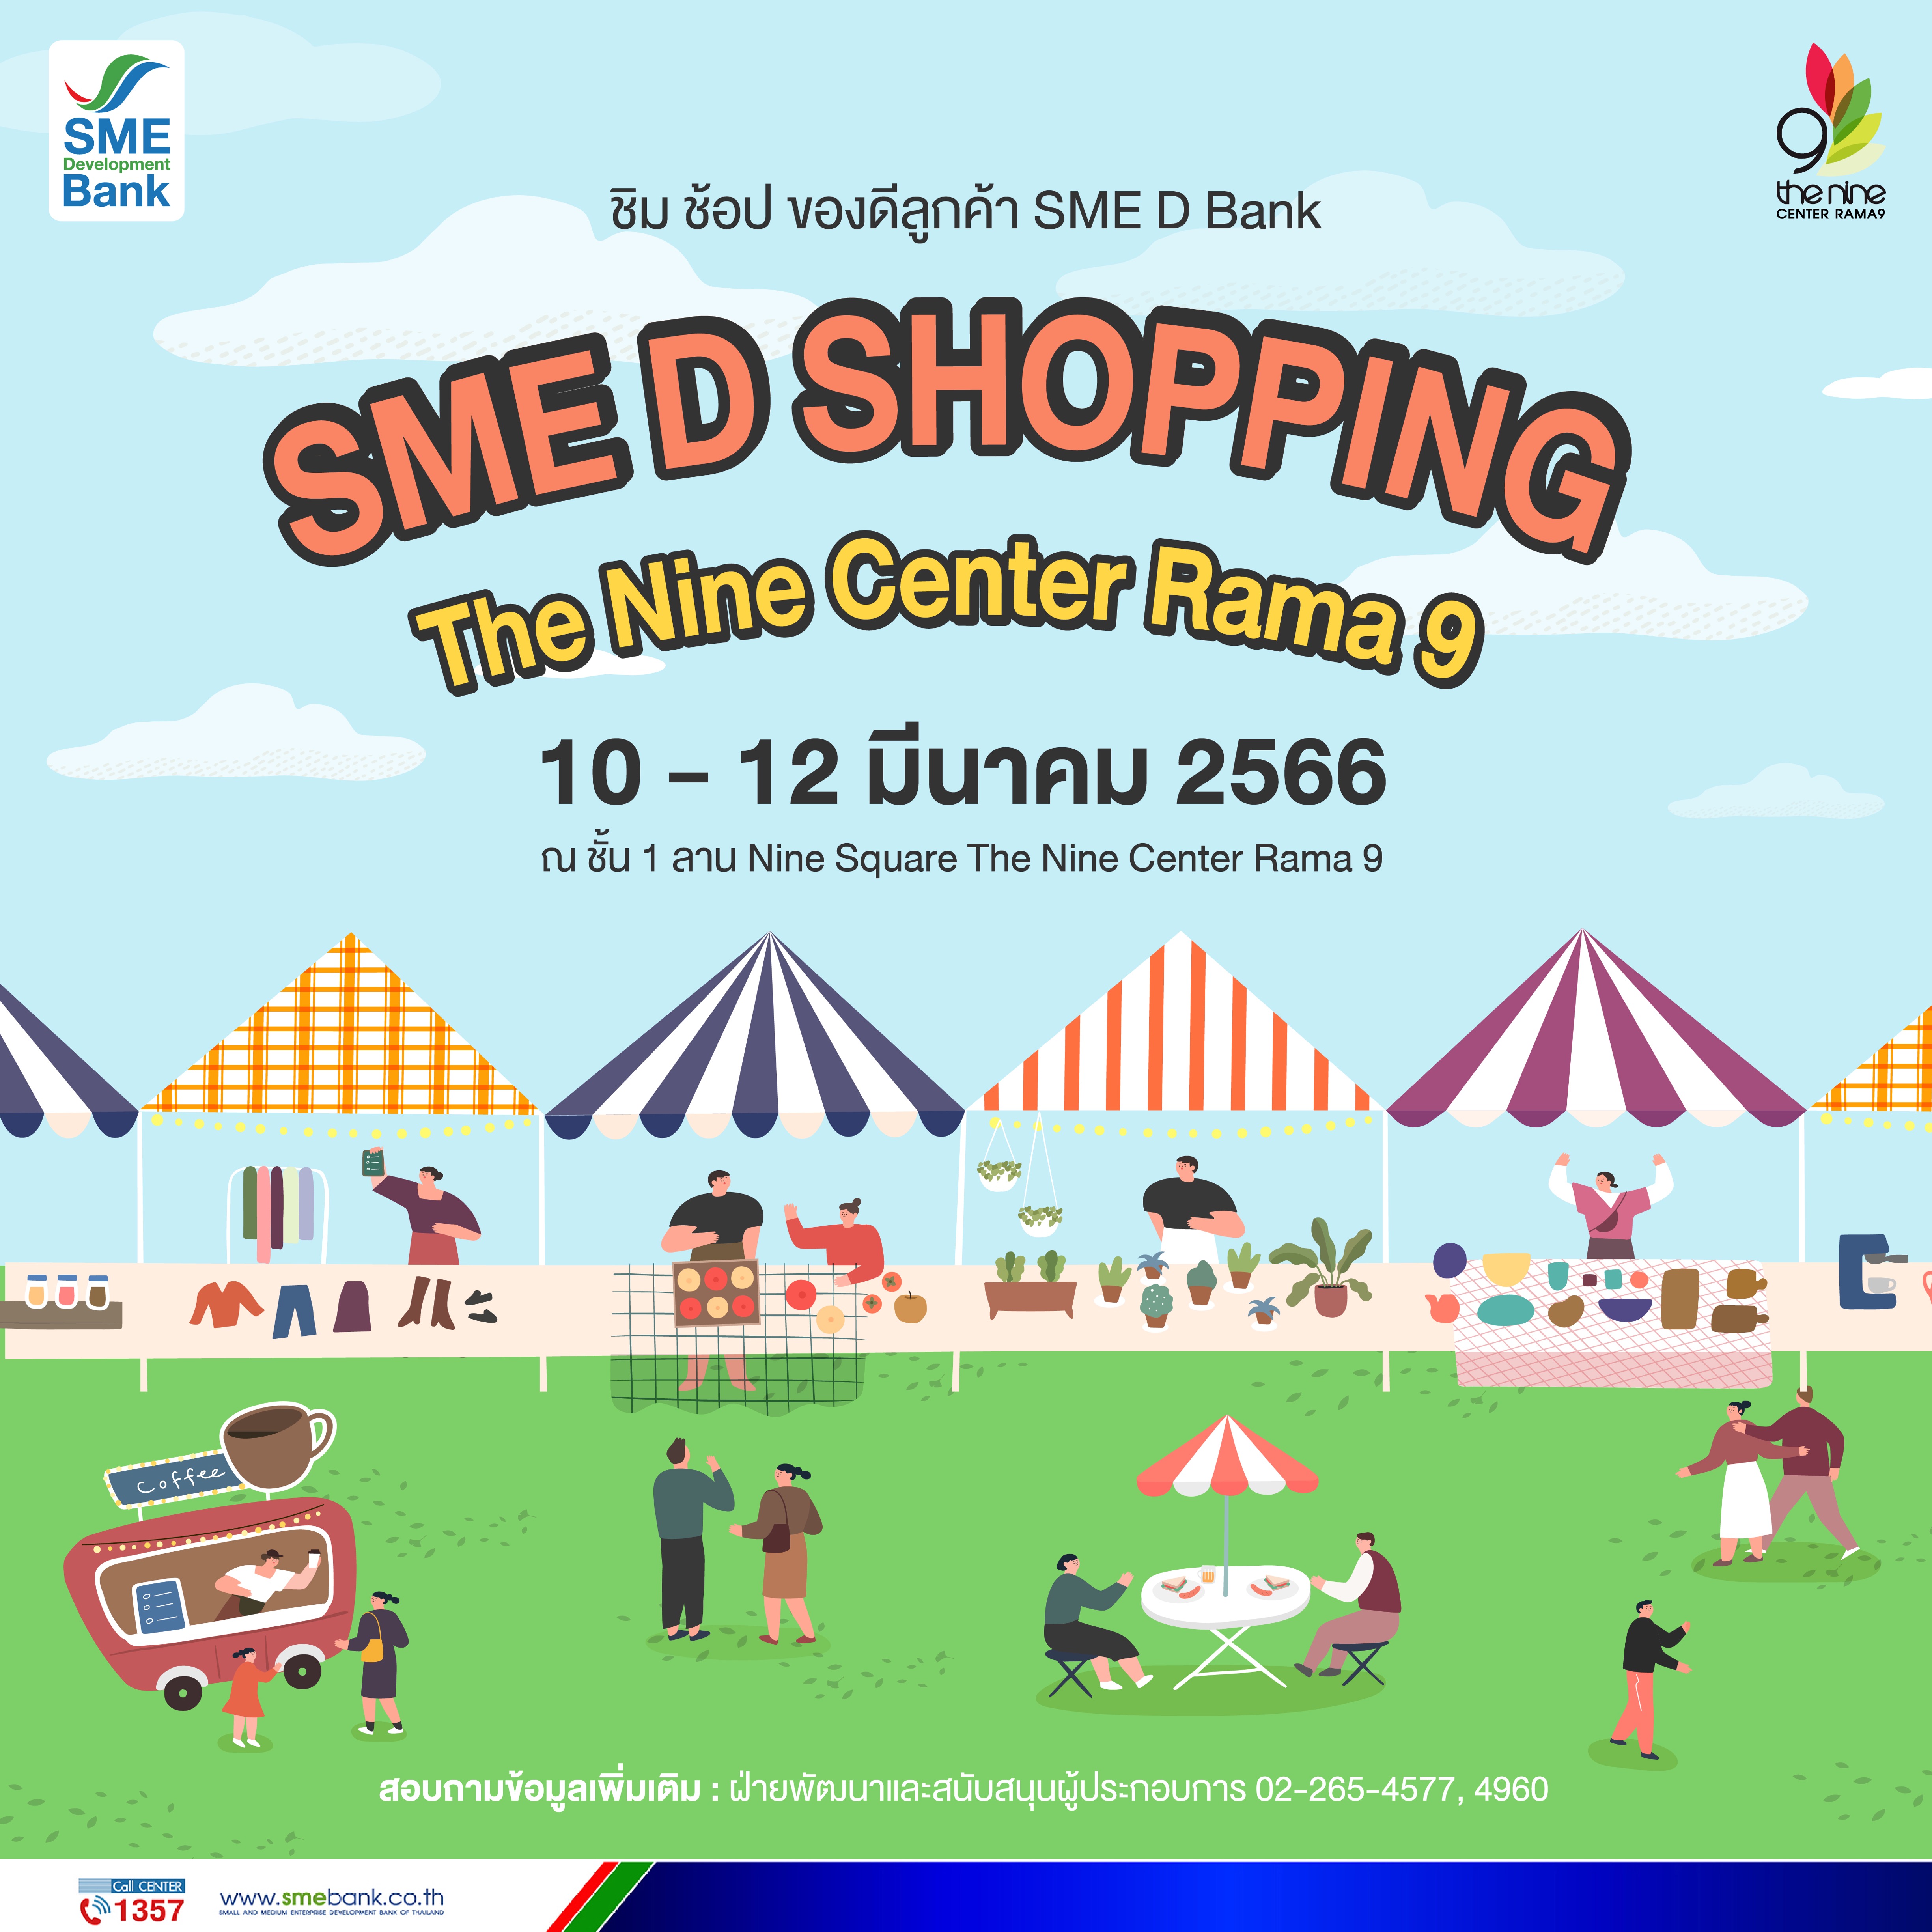 SME D Bank จับมือ ‘เดอะไนน์ เซ็นเตอร์ พระราม 9’  จัด ‘SME D SHOPPING’ ยกทัพสุดยอดสินค้าเด็ดเอสเอ็มอีทั่วไทยให้ช้อปจุใจ